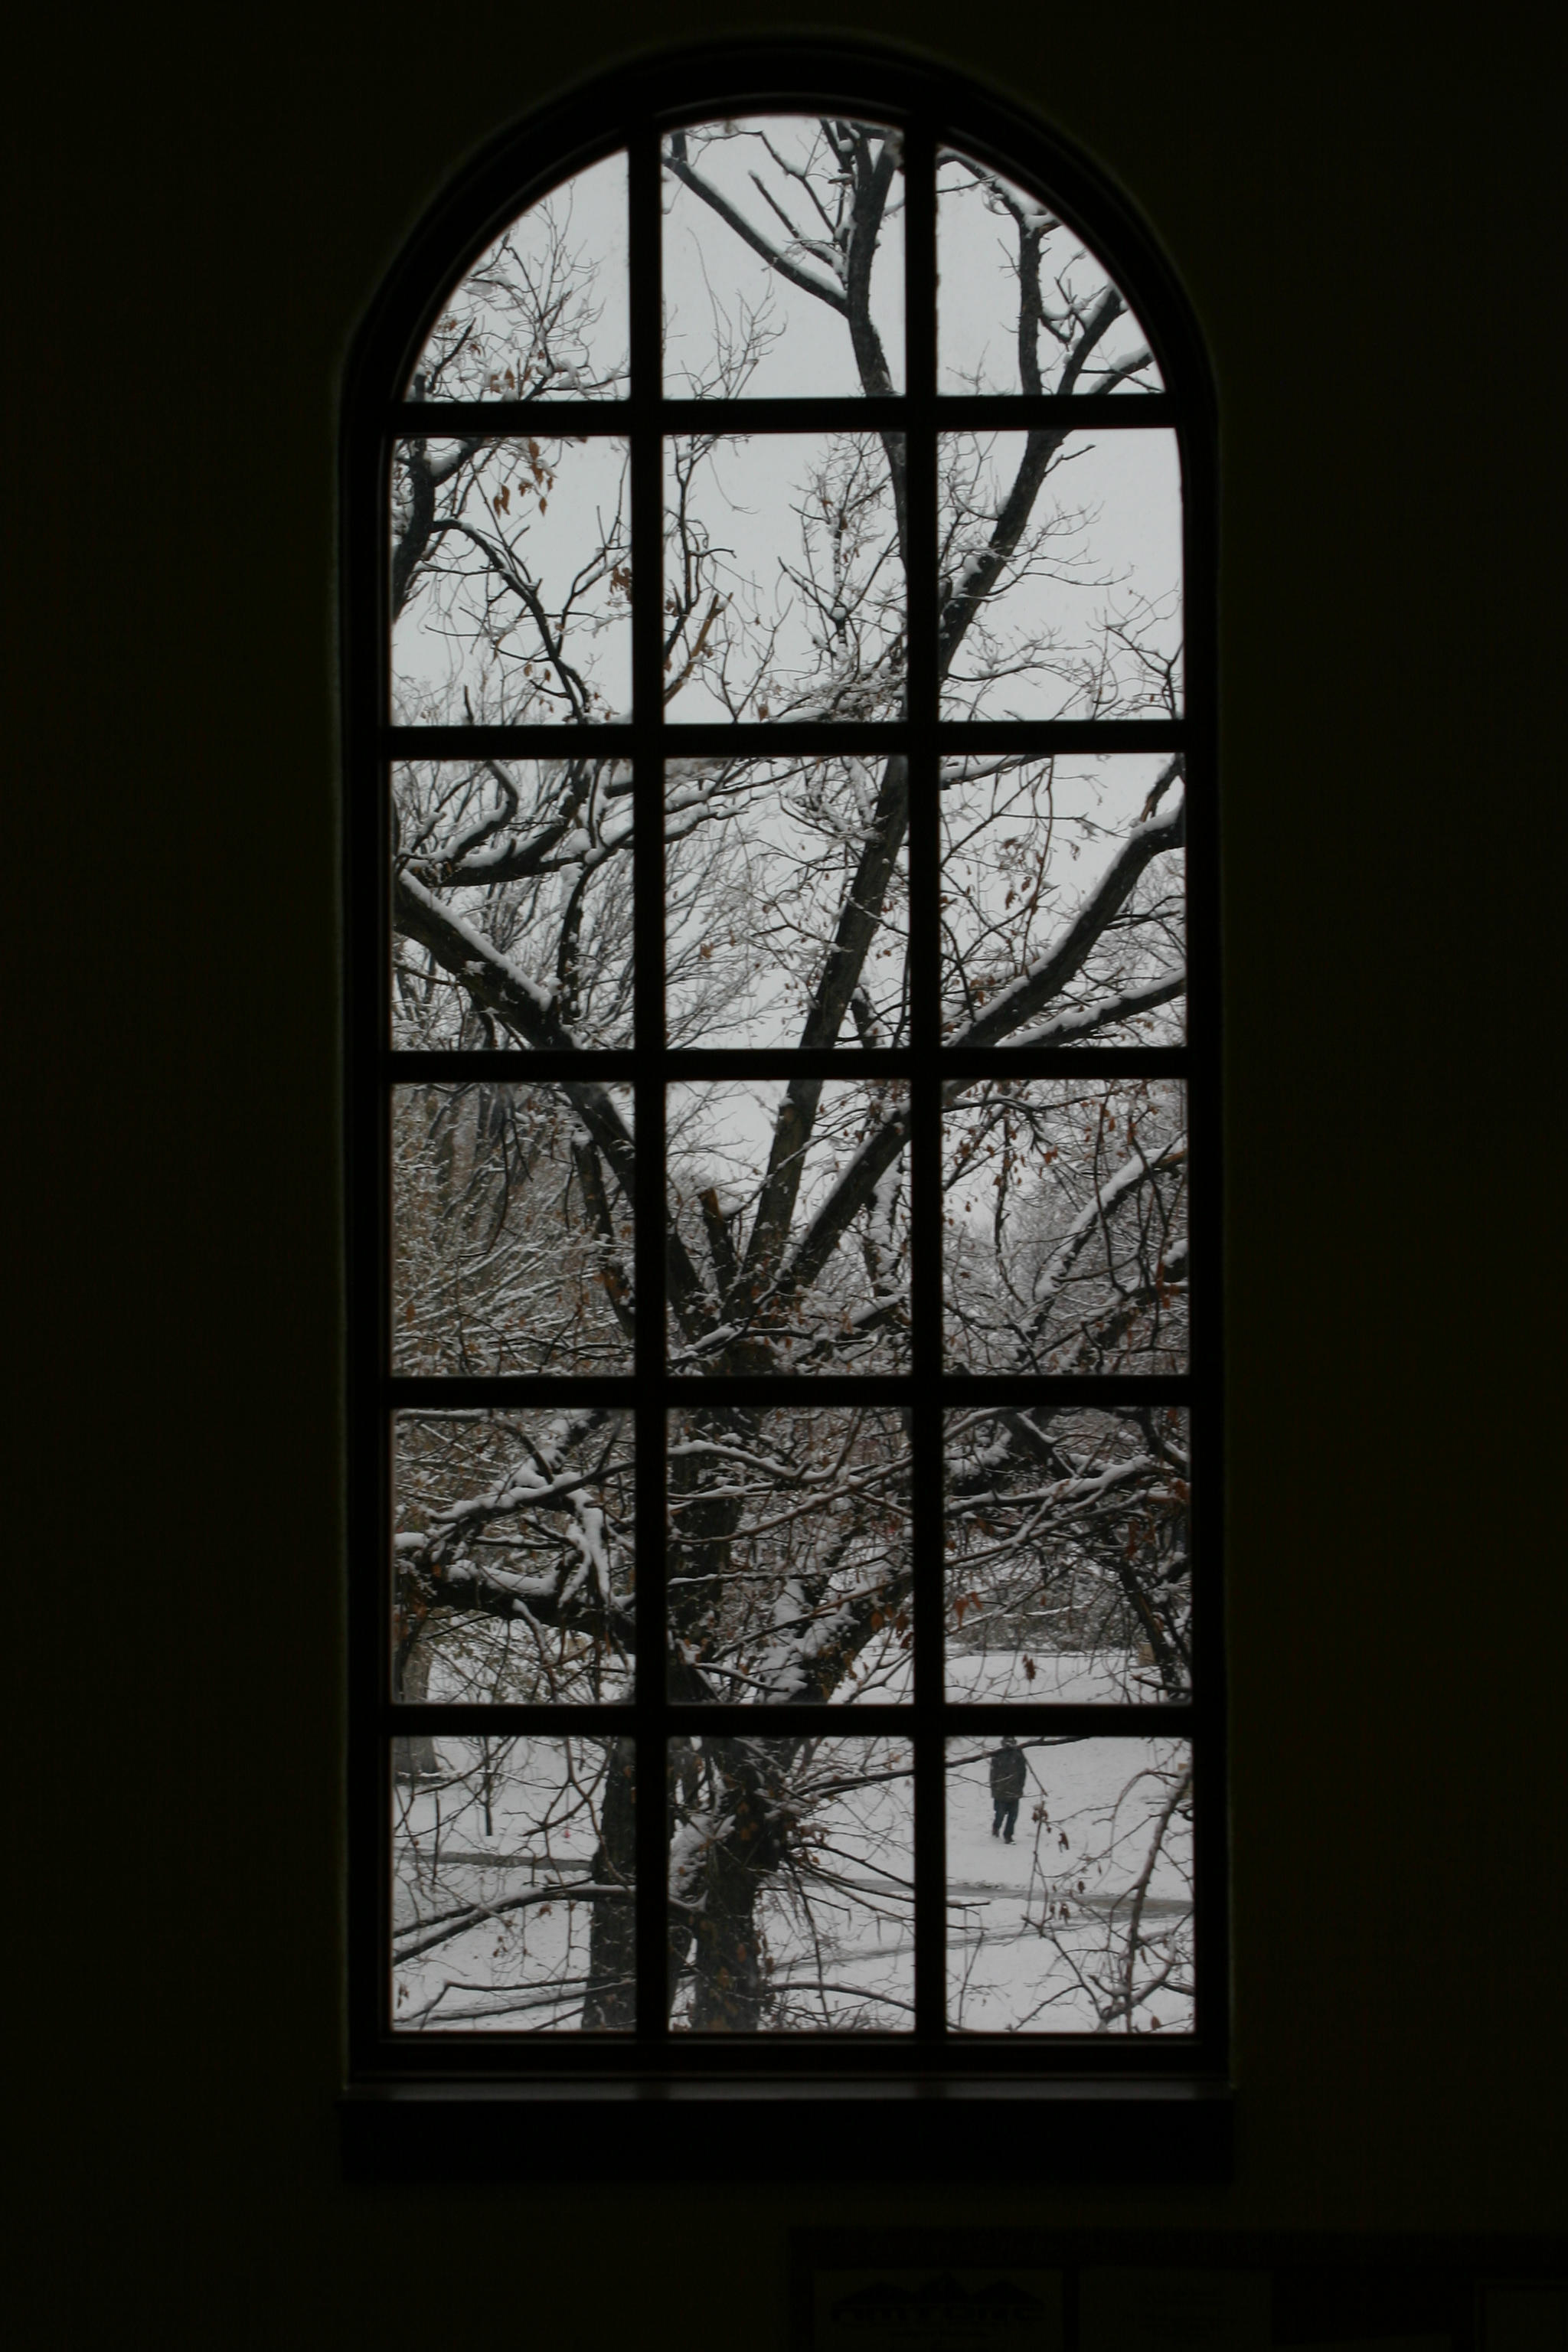 snowy window clipart - photo #43